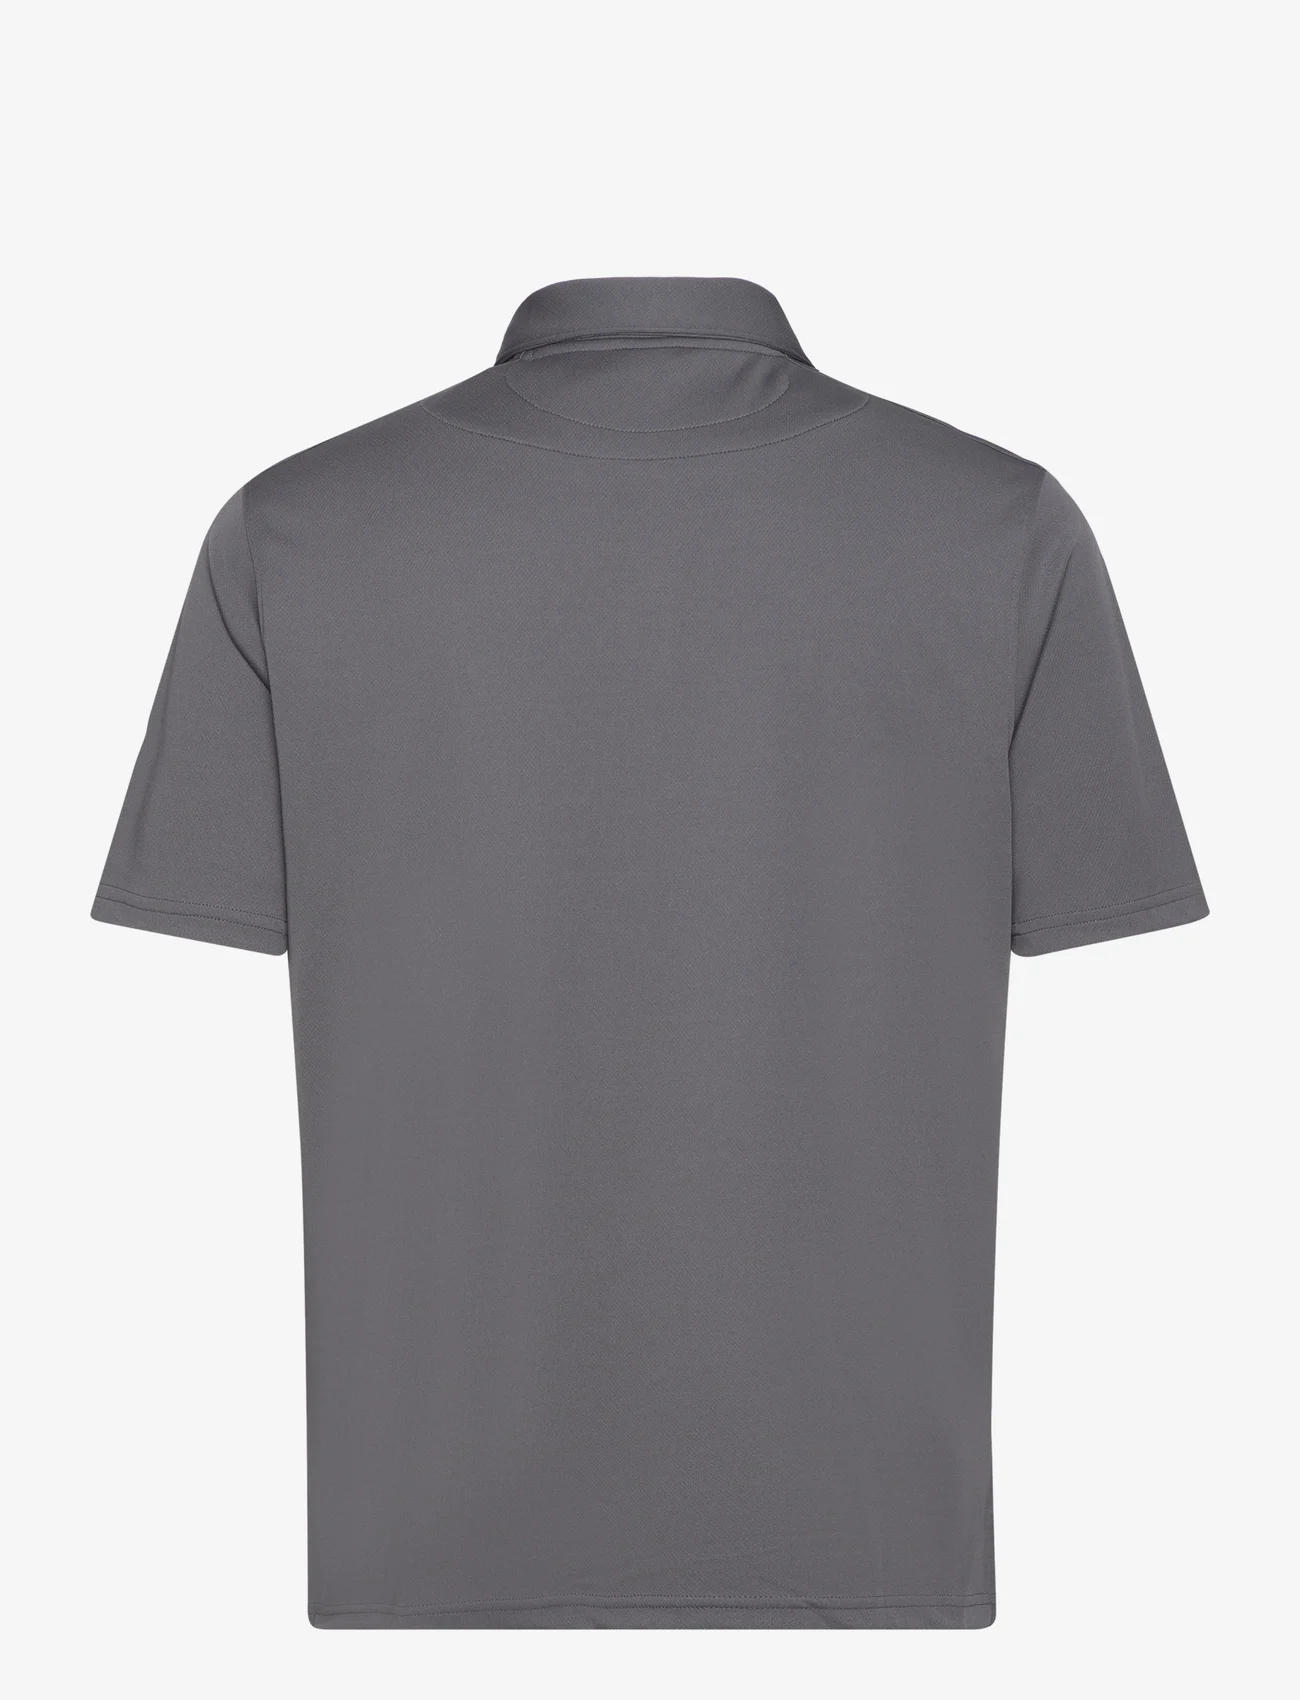 Oakley Sports - OAKLEY ICON TN PROTECT RC - kurzärmelig - uniform grey - 1